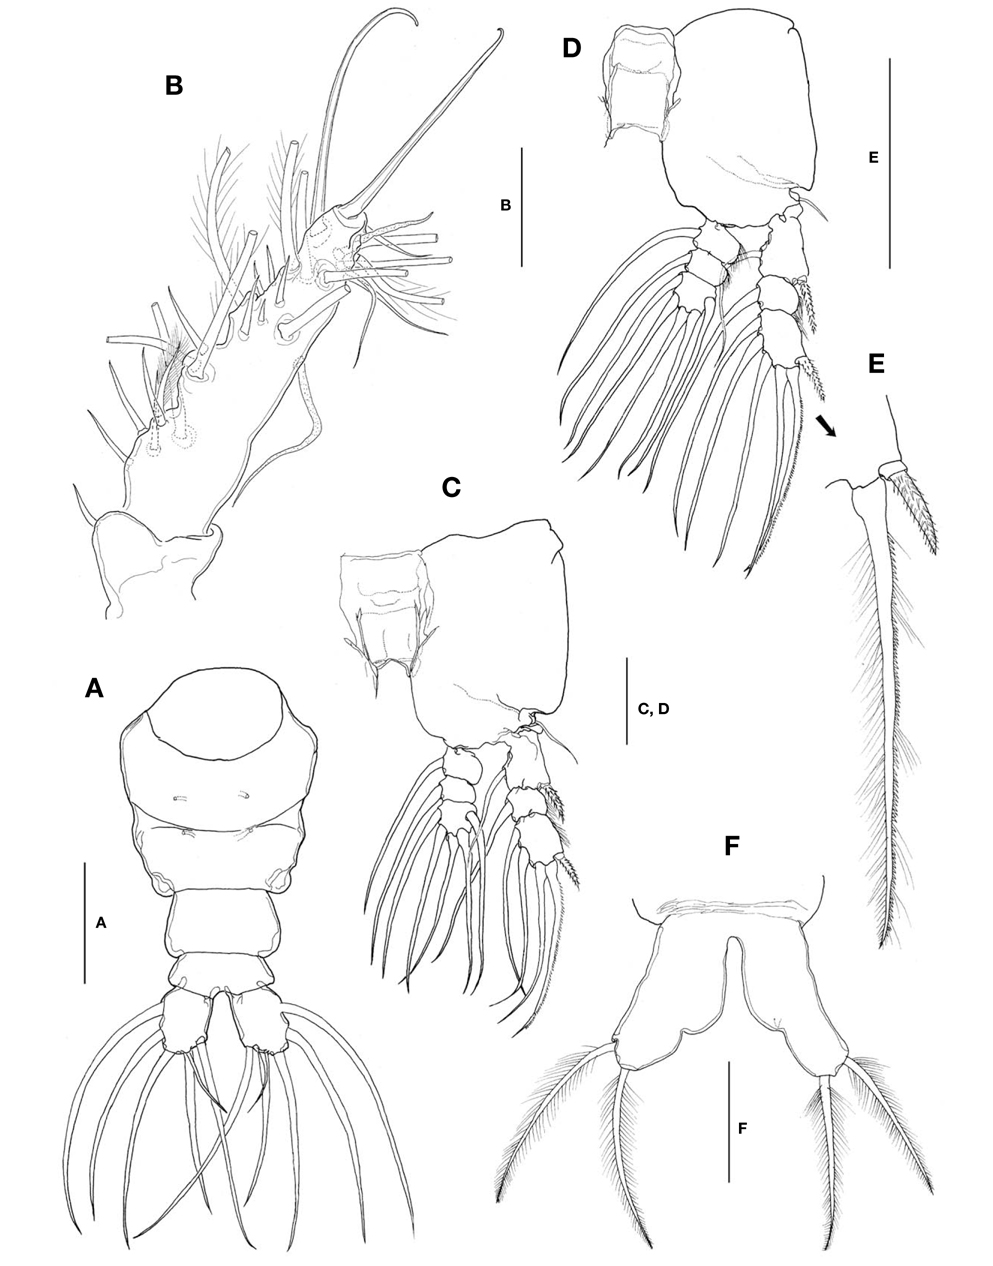 Monstrilla hamatapex Grygier and Ohtsuka, female: A, Urosome, dorsal; B, Antennule; C, Leg 1; D, Leg 3; E, Outer spine and outer apical seta on third exopodal segment of leg 3; F, Leg 5. Scale bars: A-F=100 μm.